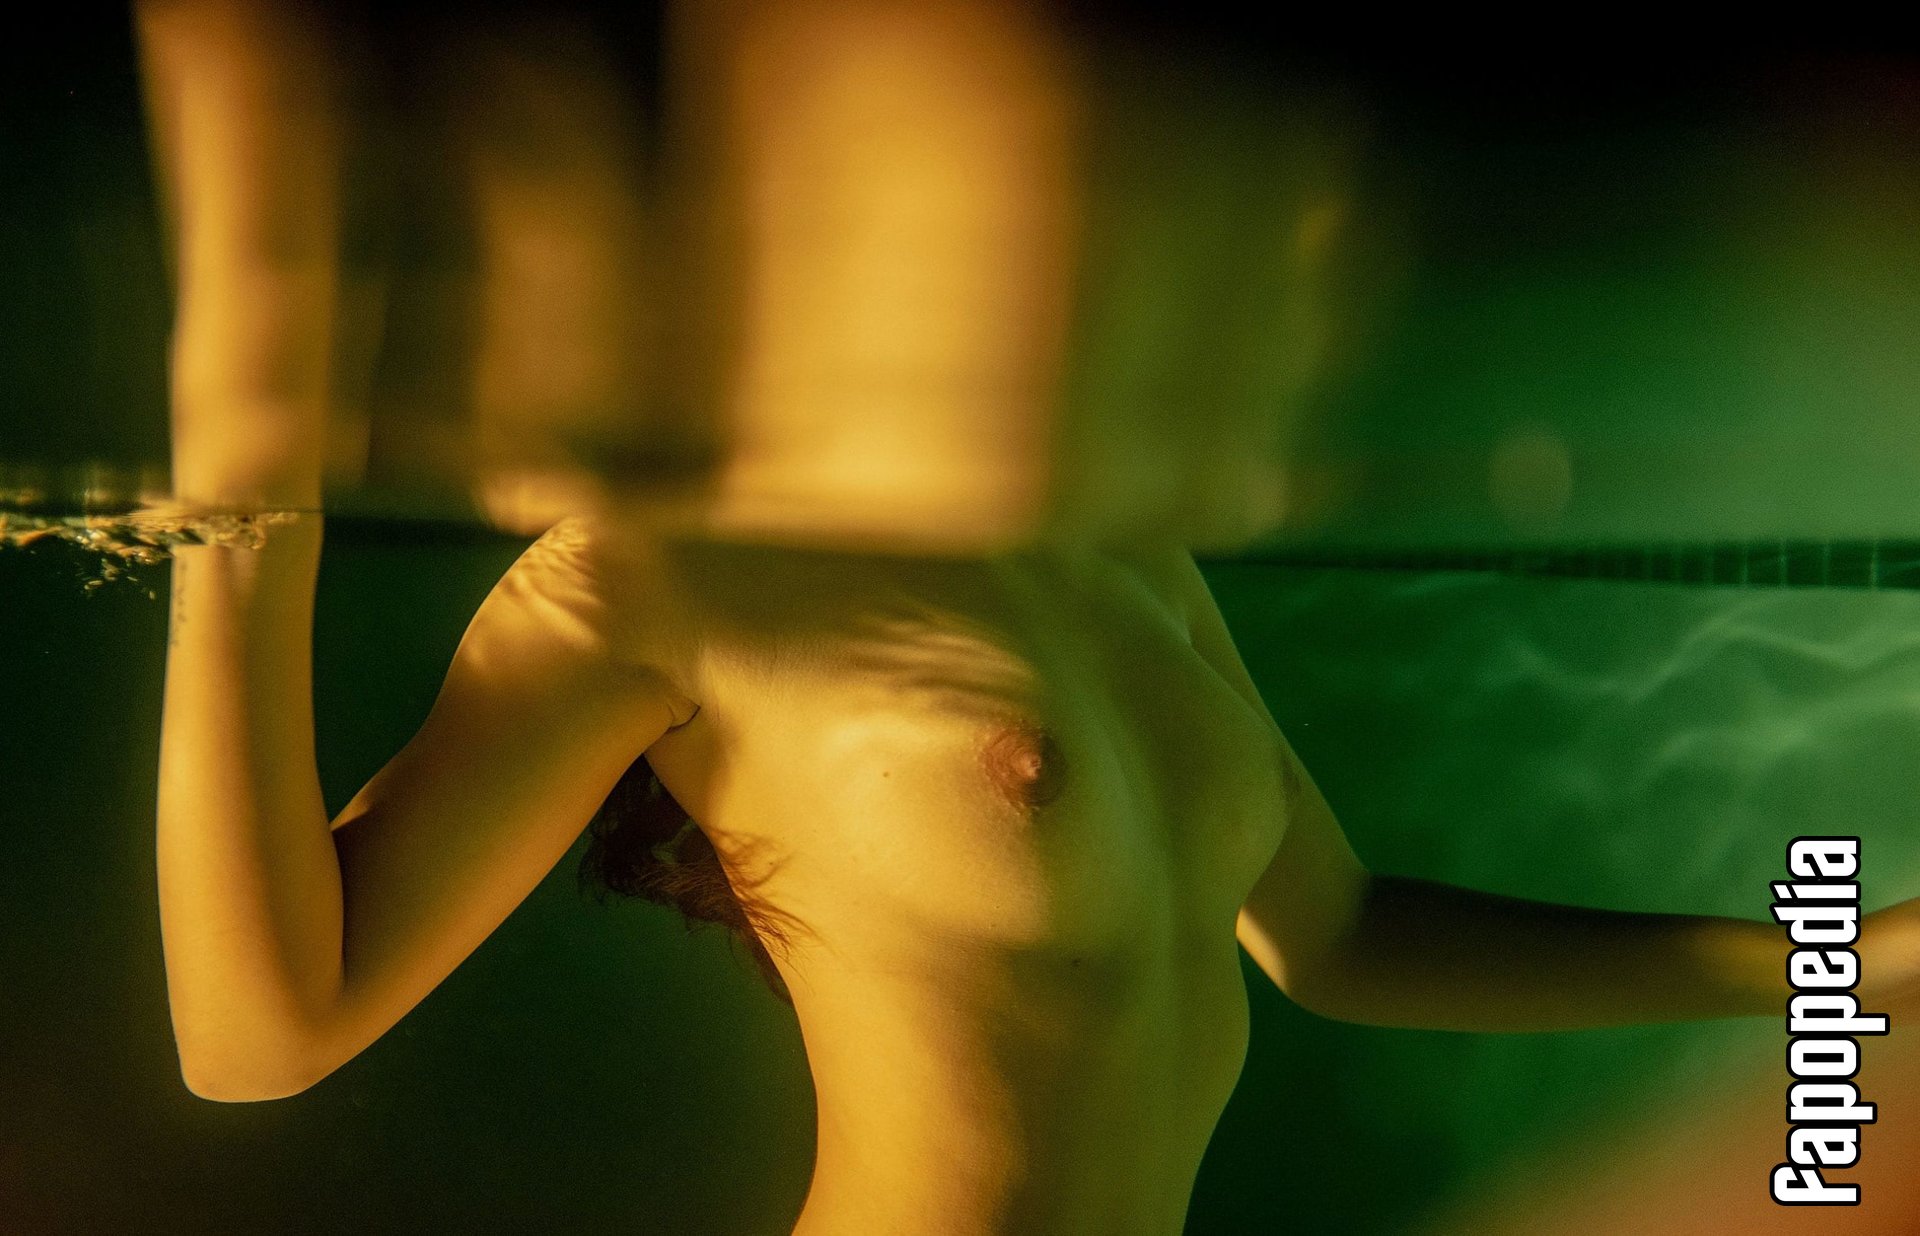 Marisa wayne nude 👉 👌 Marisa Papen lying nude poolside